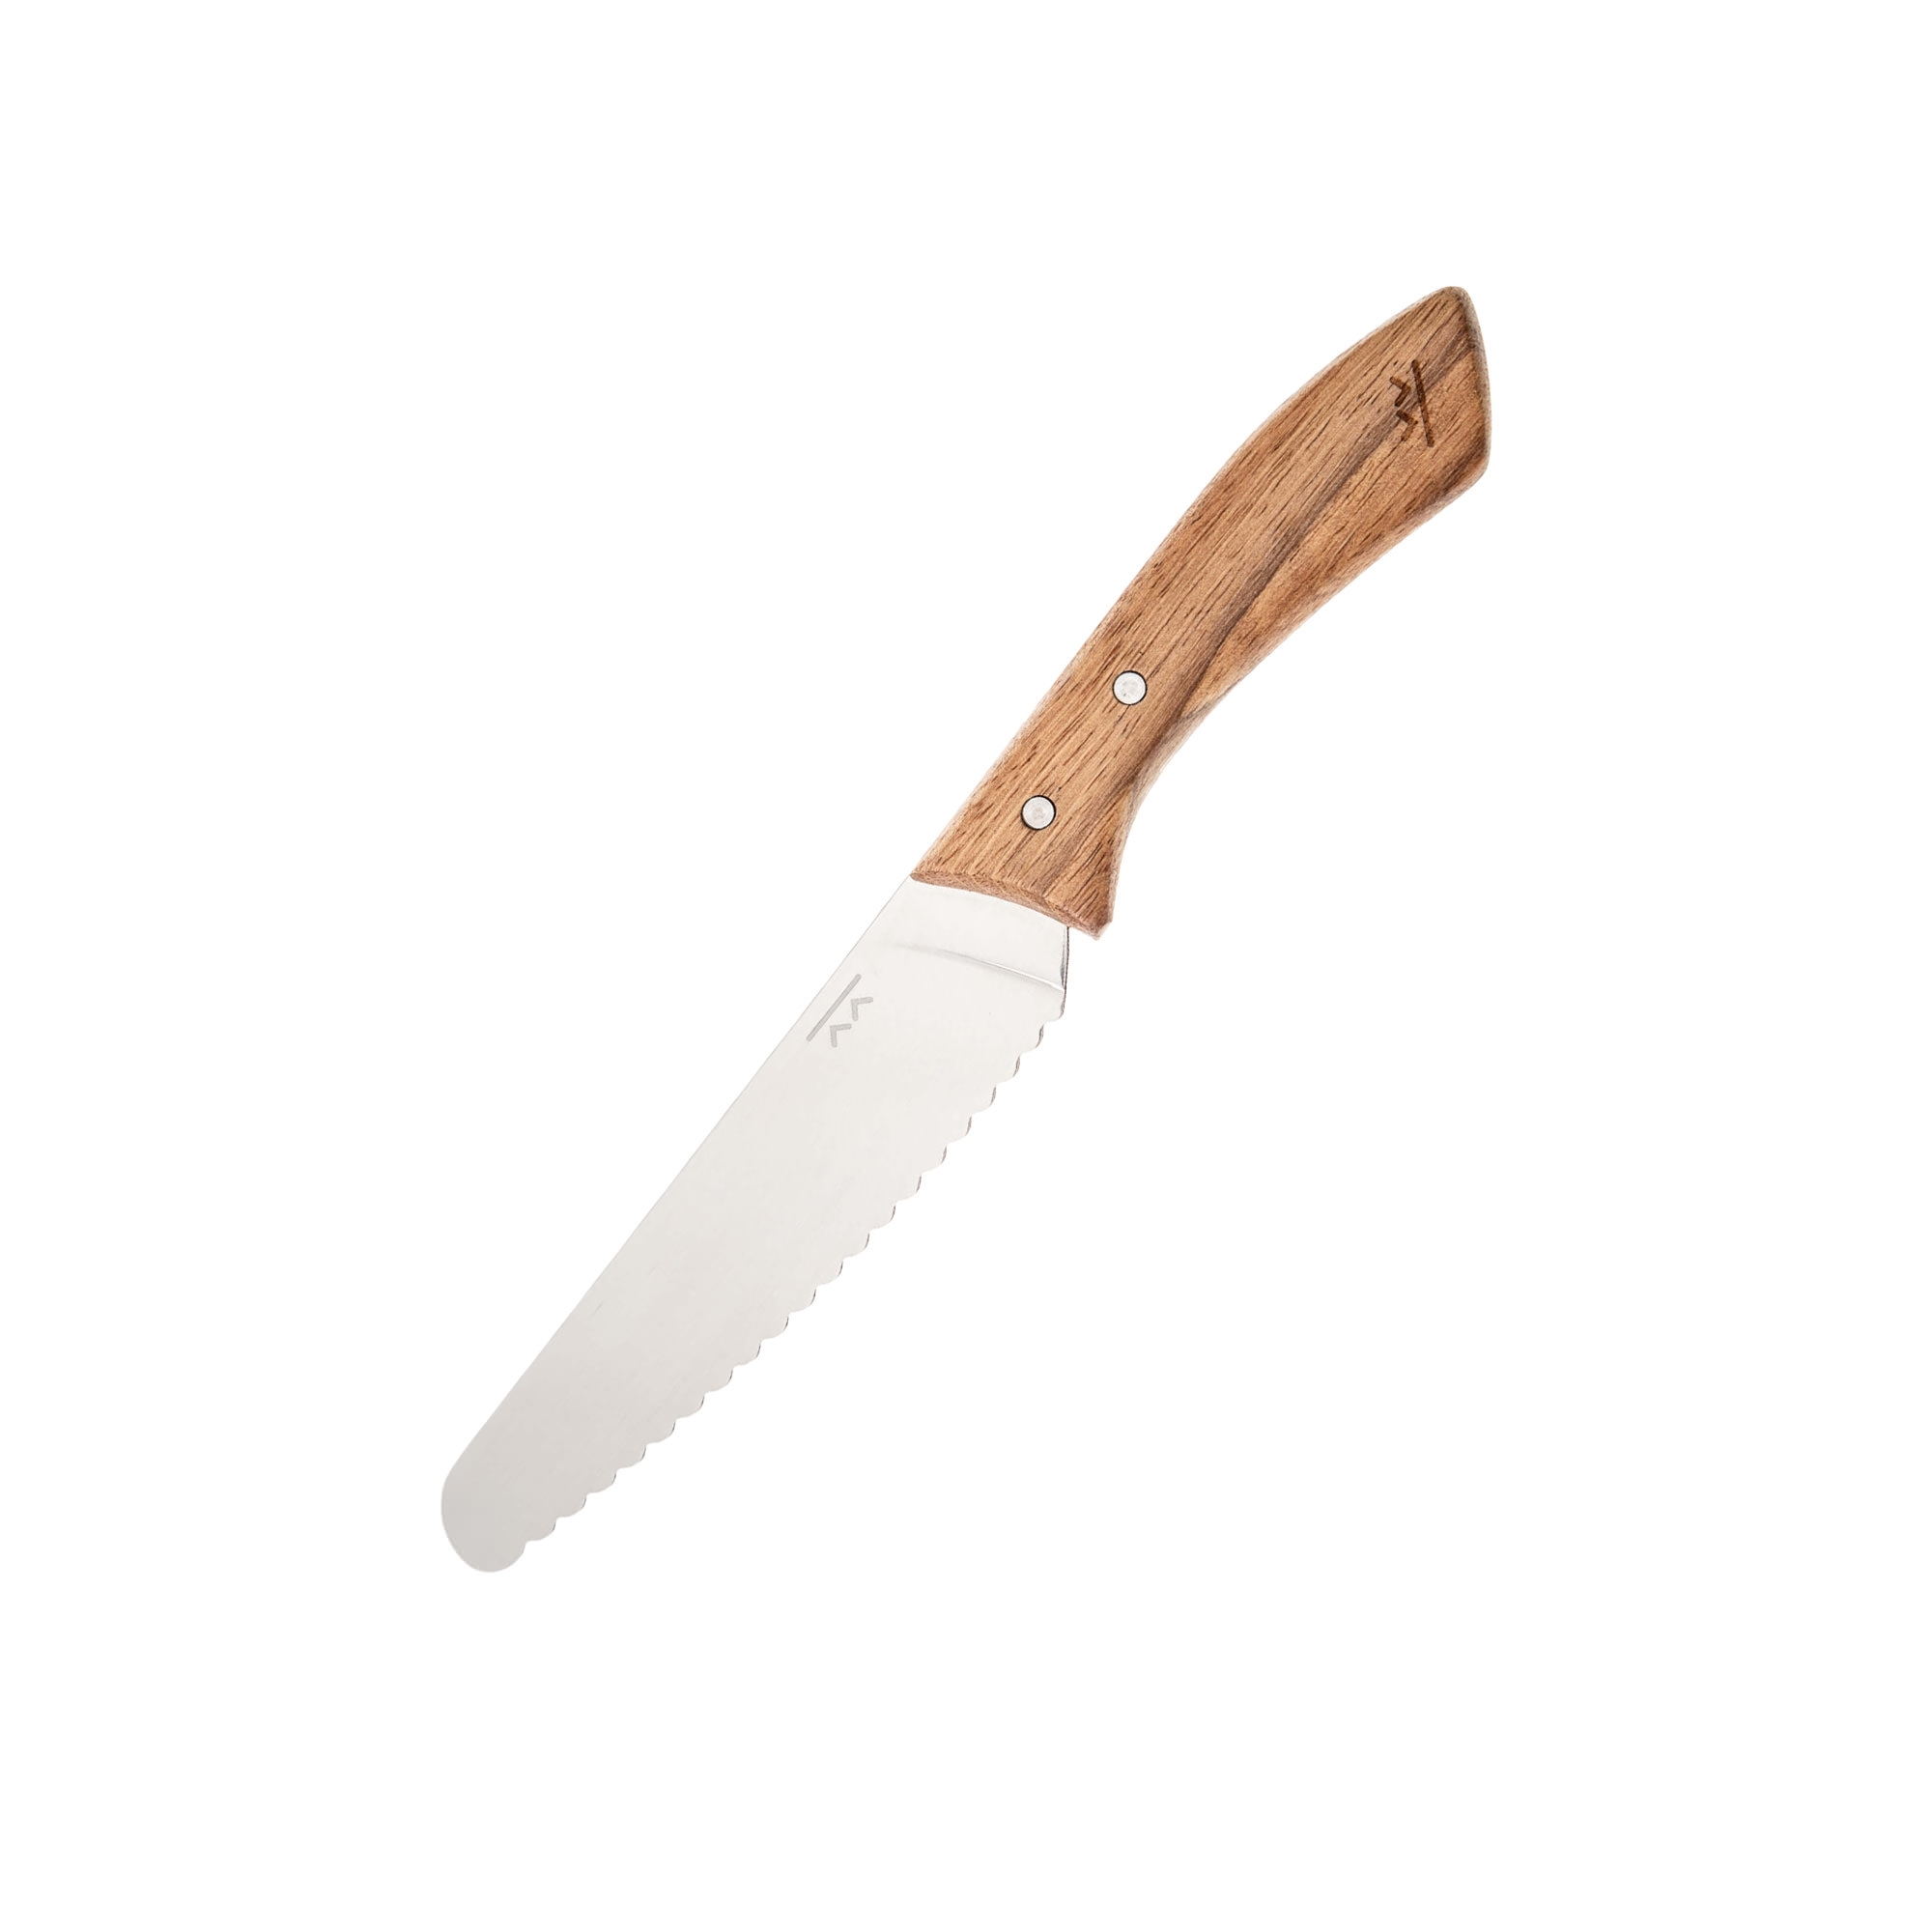 Kiddikutter Adult Safe Knife with Wood Handle Image 1